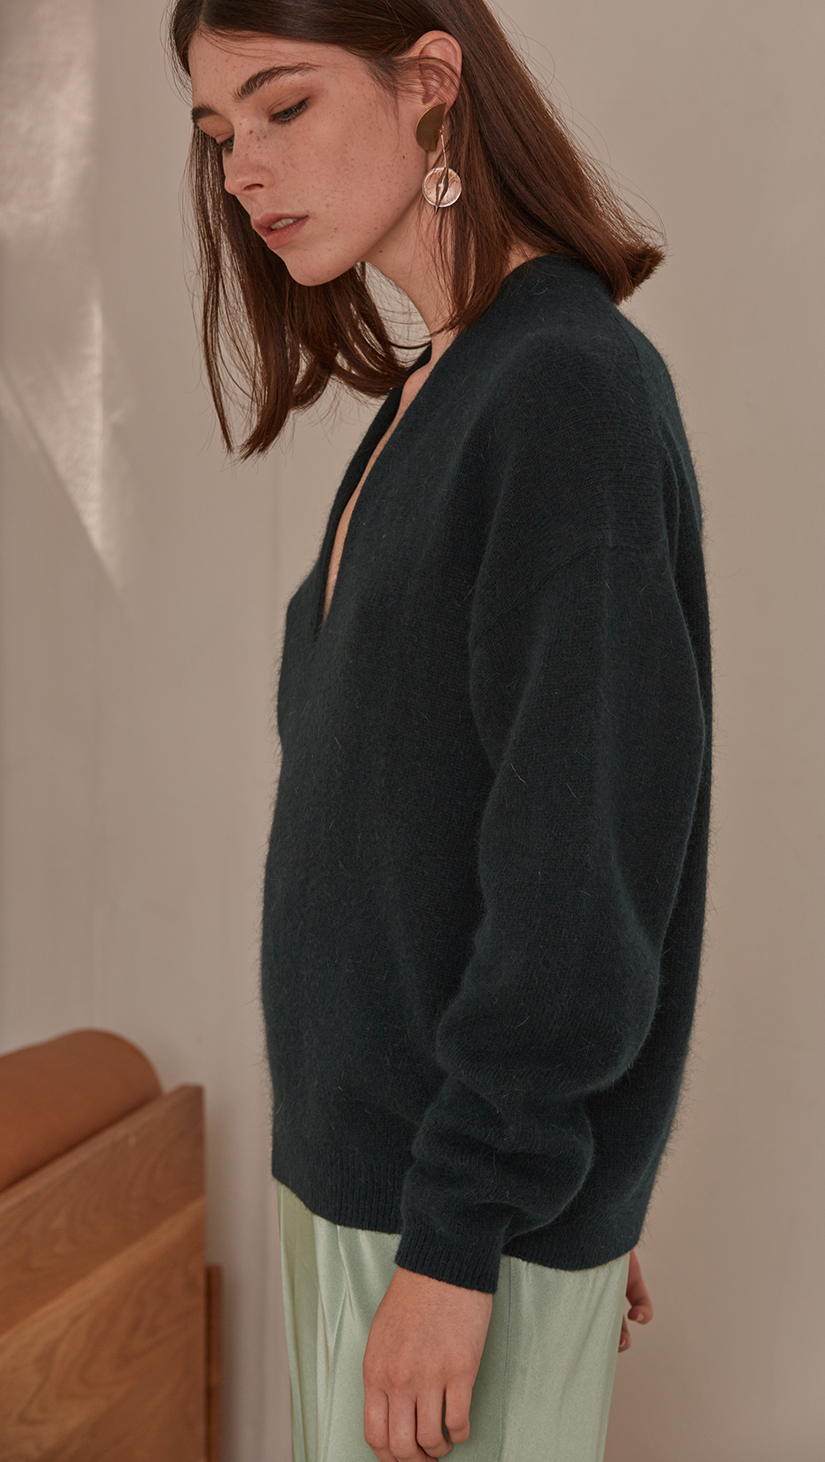 Agostina Sweater